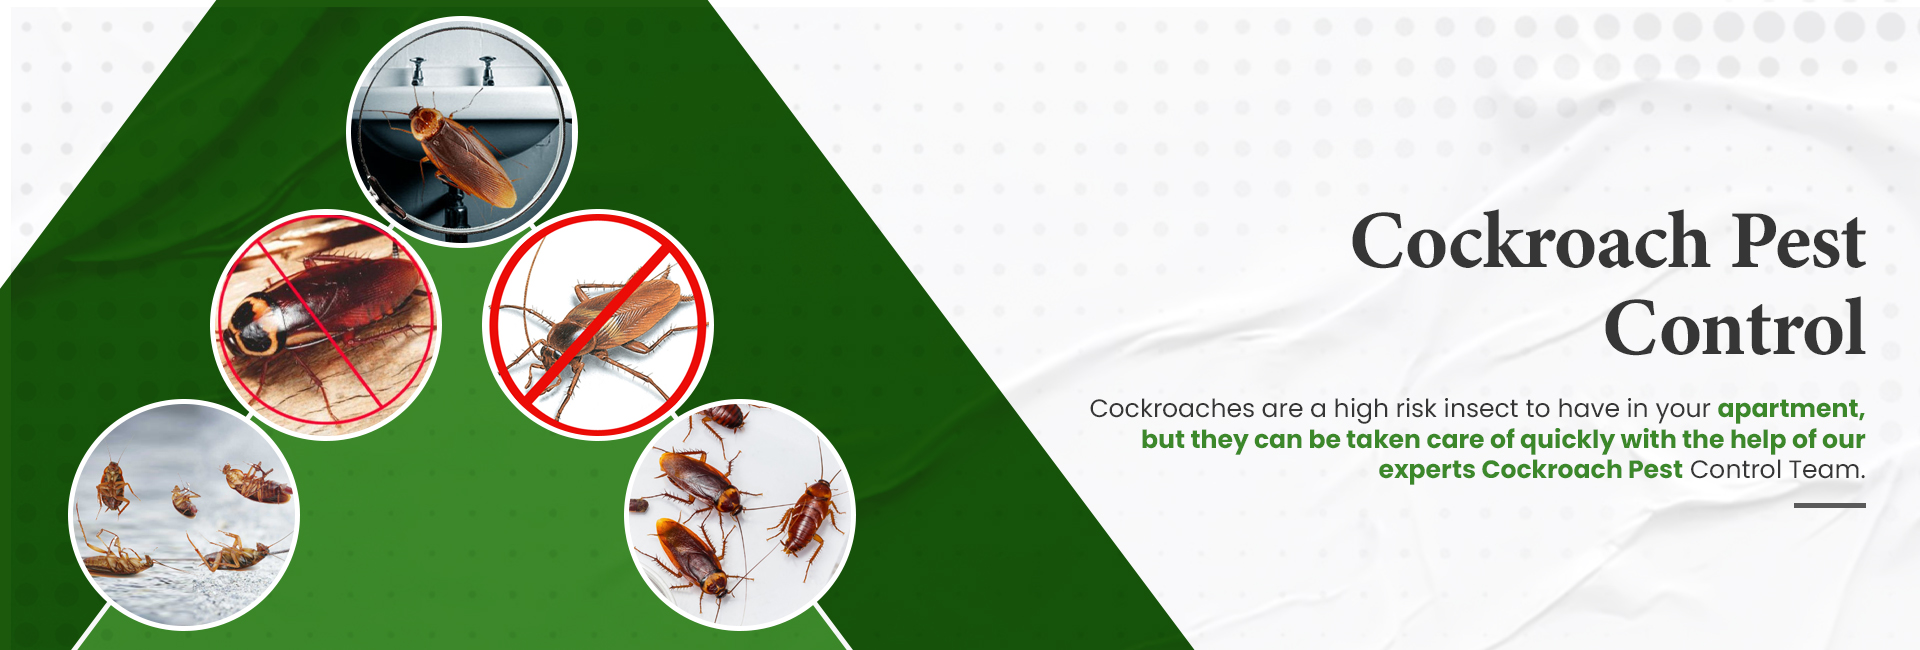 godrej pest control cockroach service